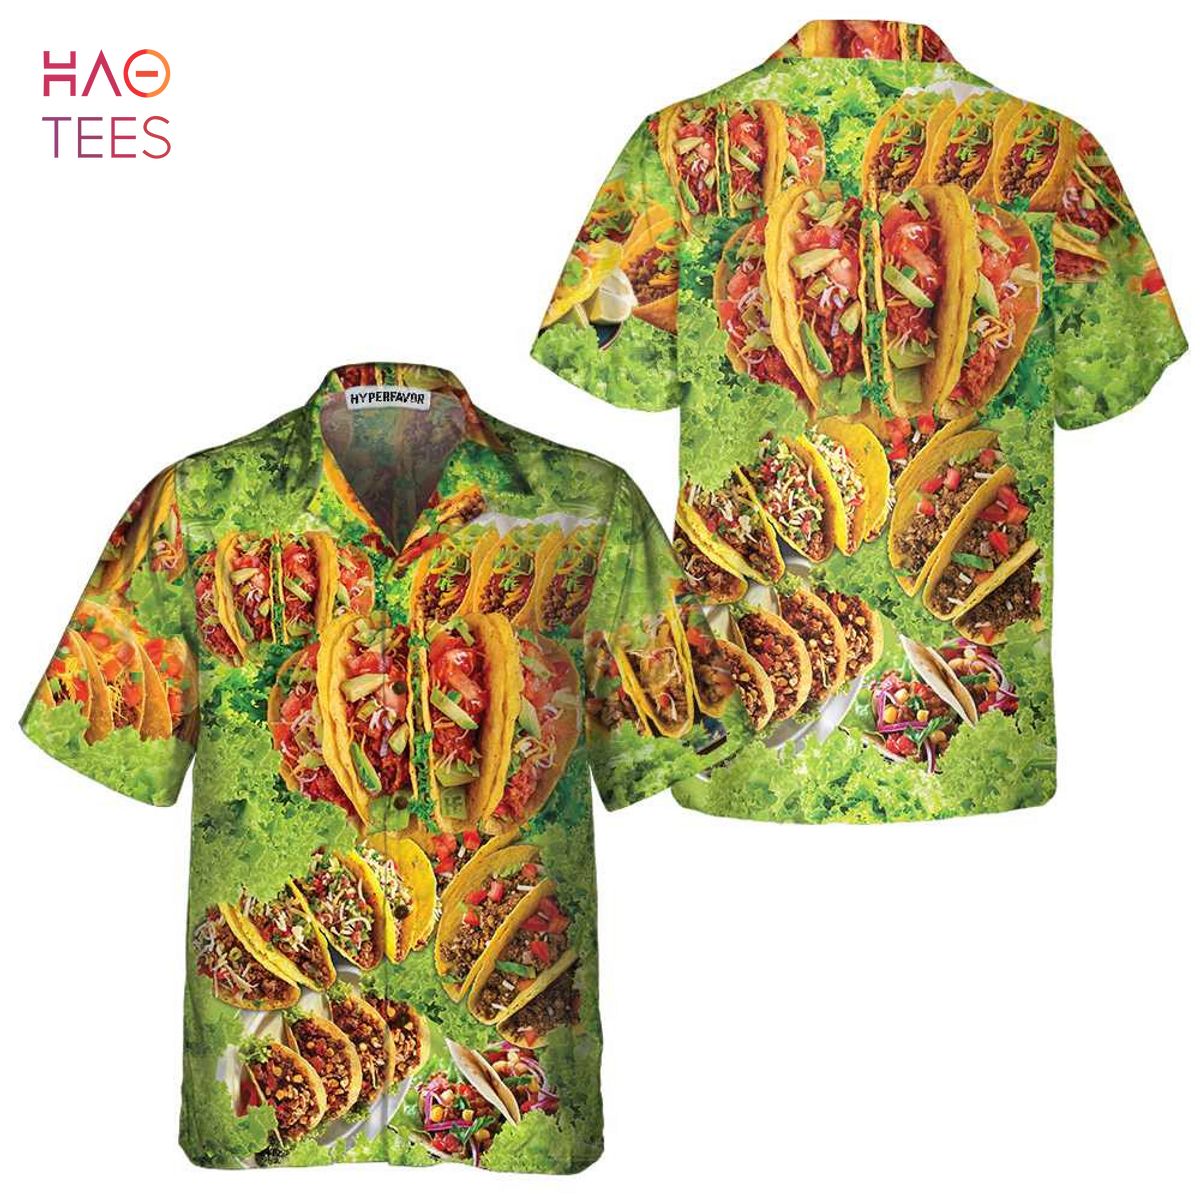 NEW More Tacos Please Hawaiian Shirt